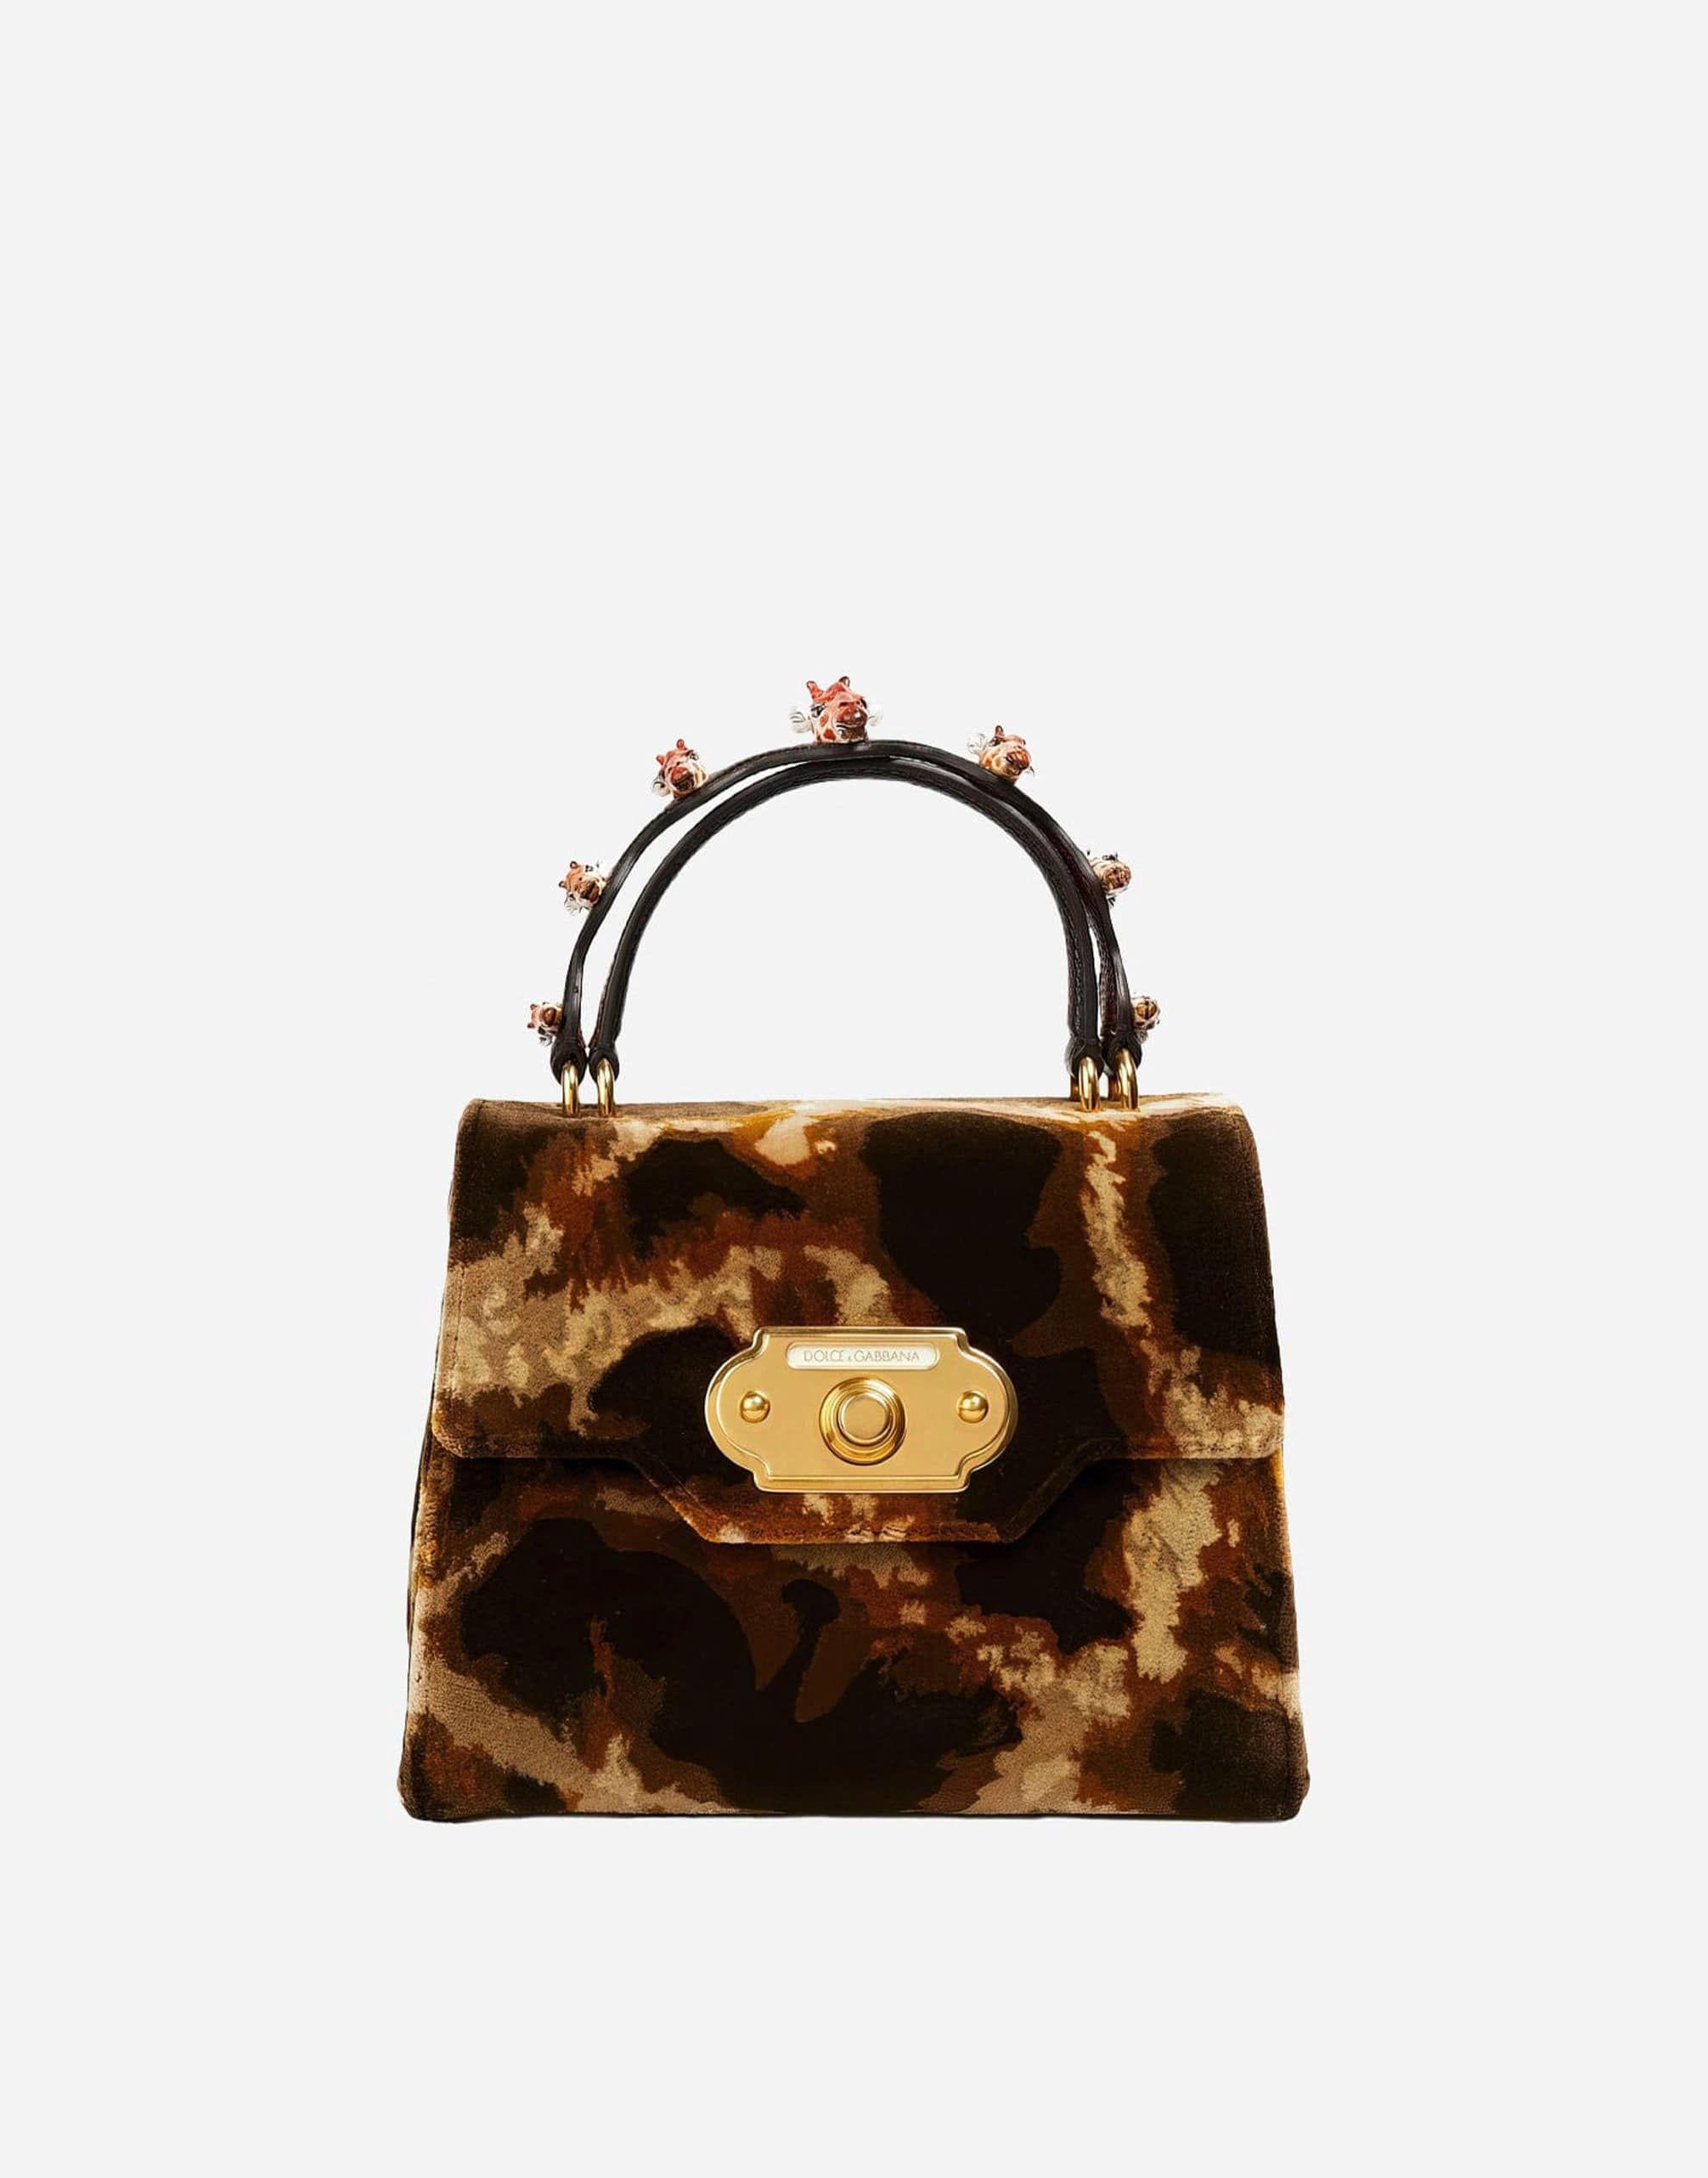 Dolce & Gabbana Leopard Print Shopping Bag - Brown